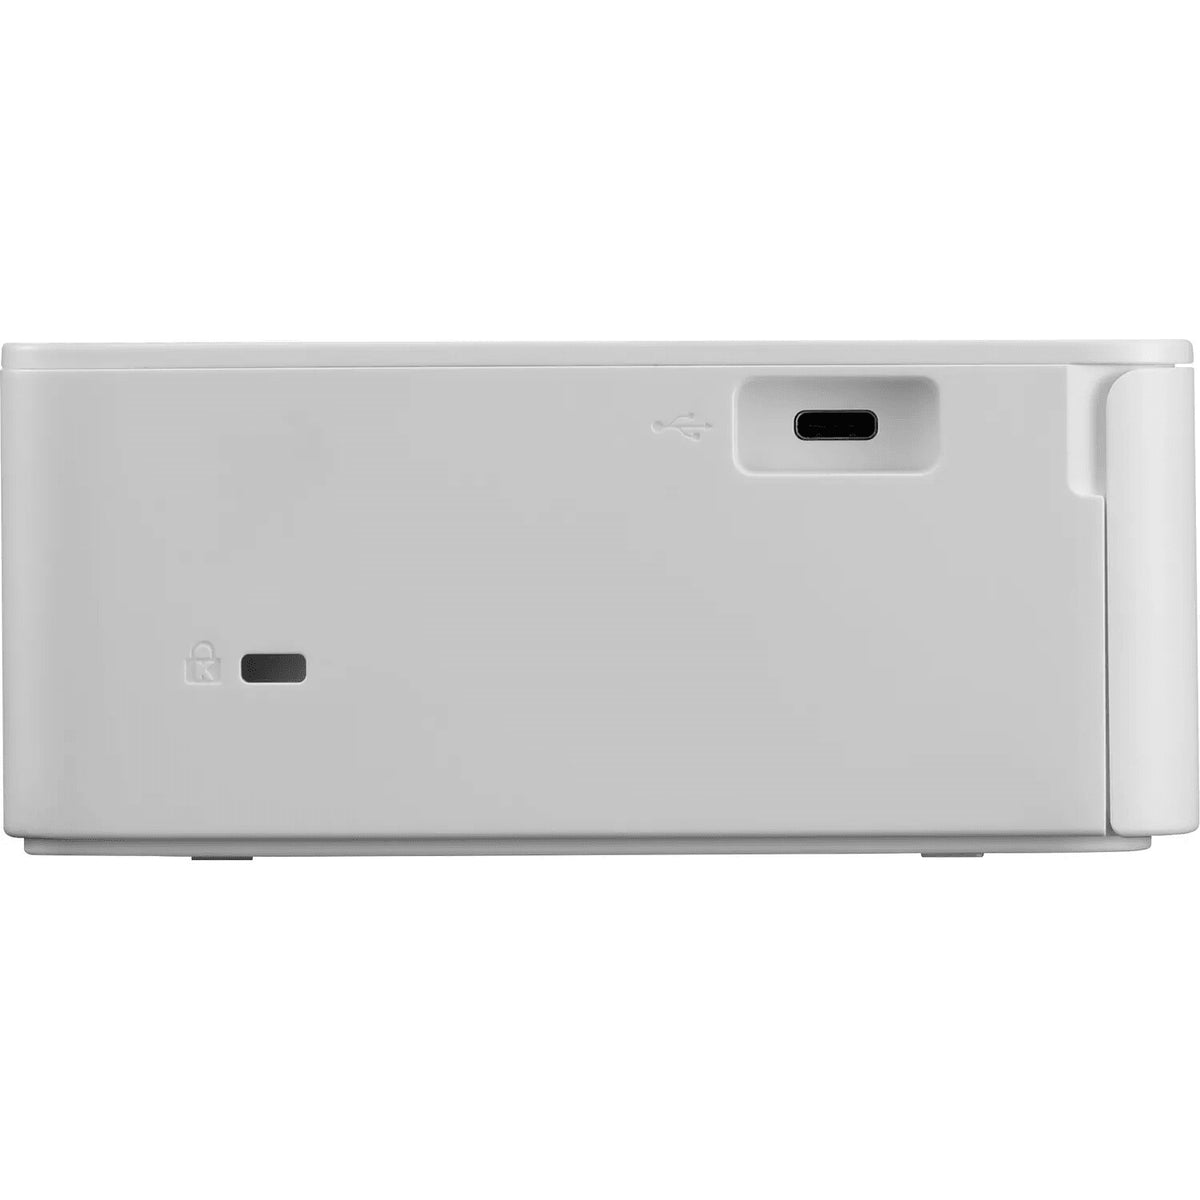 Canon SELPHY CP1500 - Wi-Fi Photo Printer in White